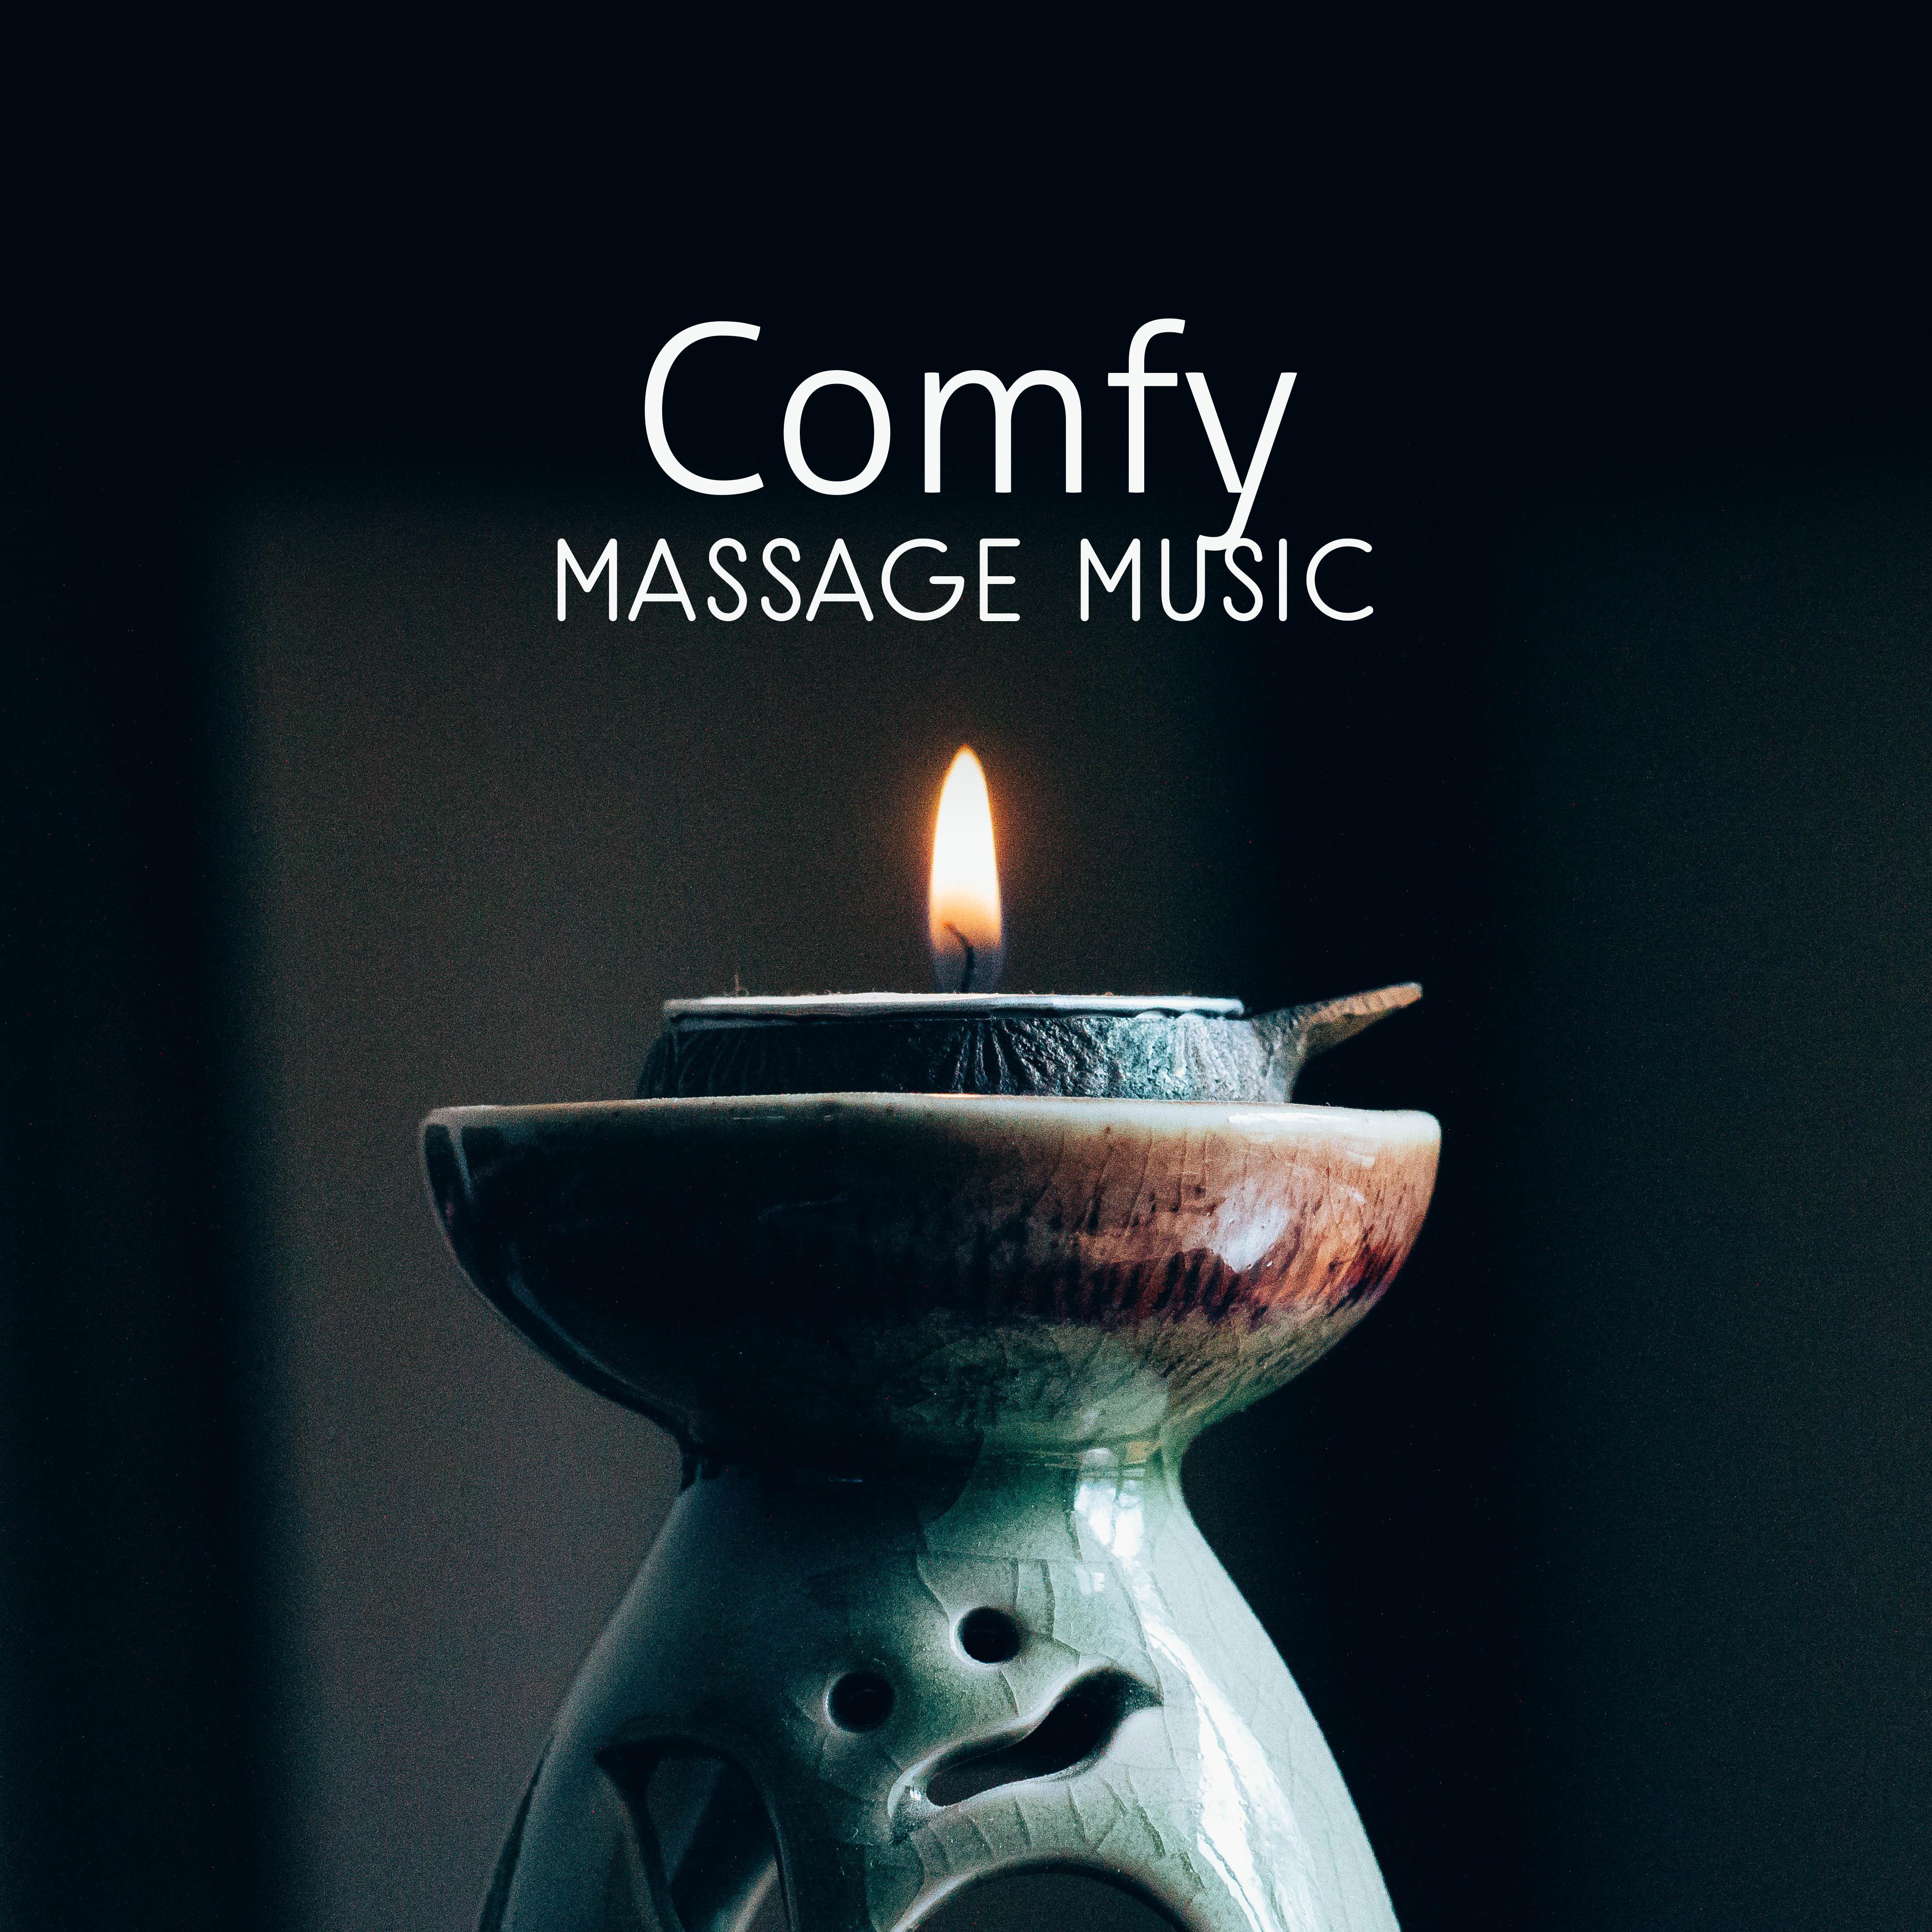 Comfy Massage Music